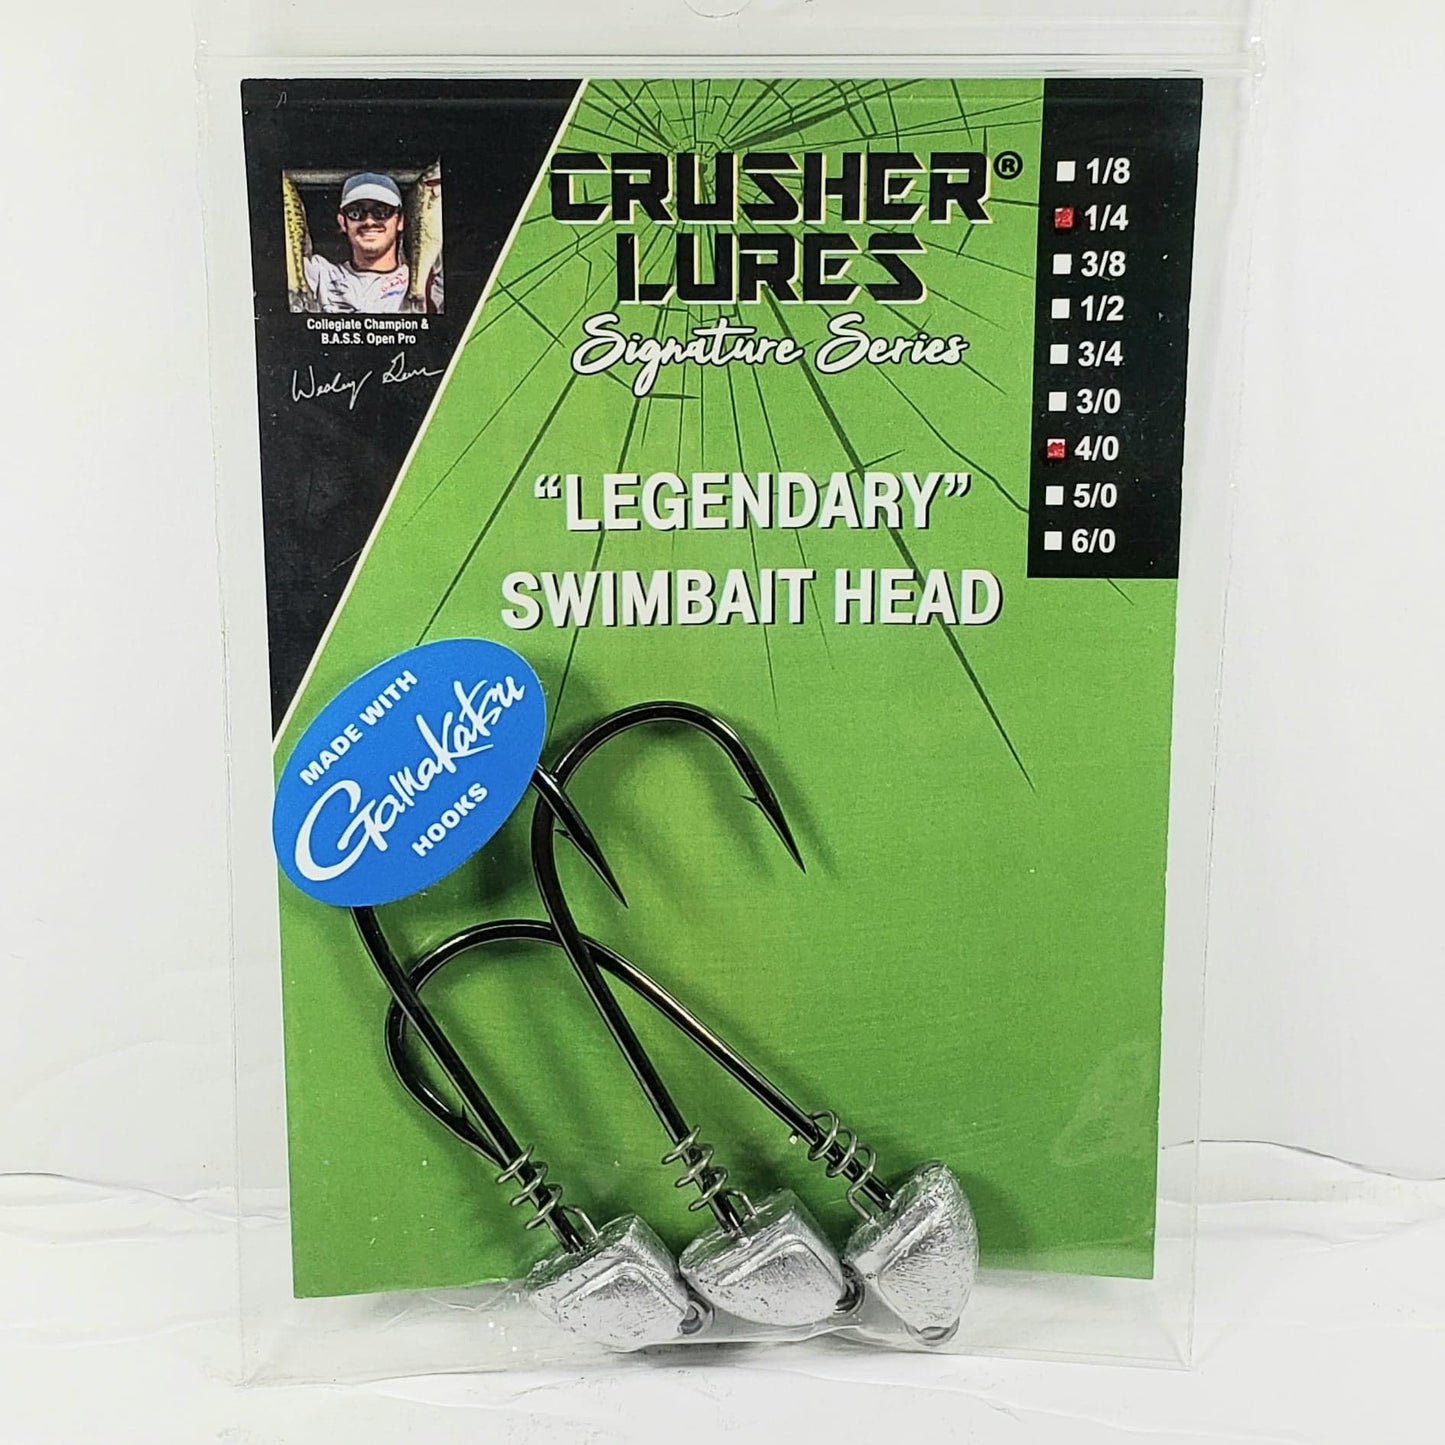 Crusher "Legendary" Swimbait Head 1/4-4/0 Hook